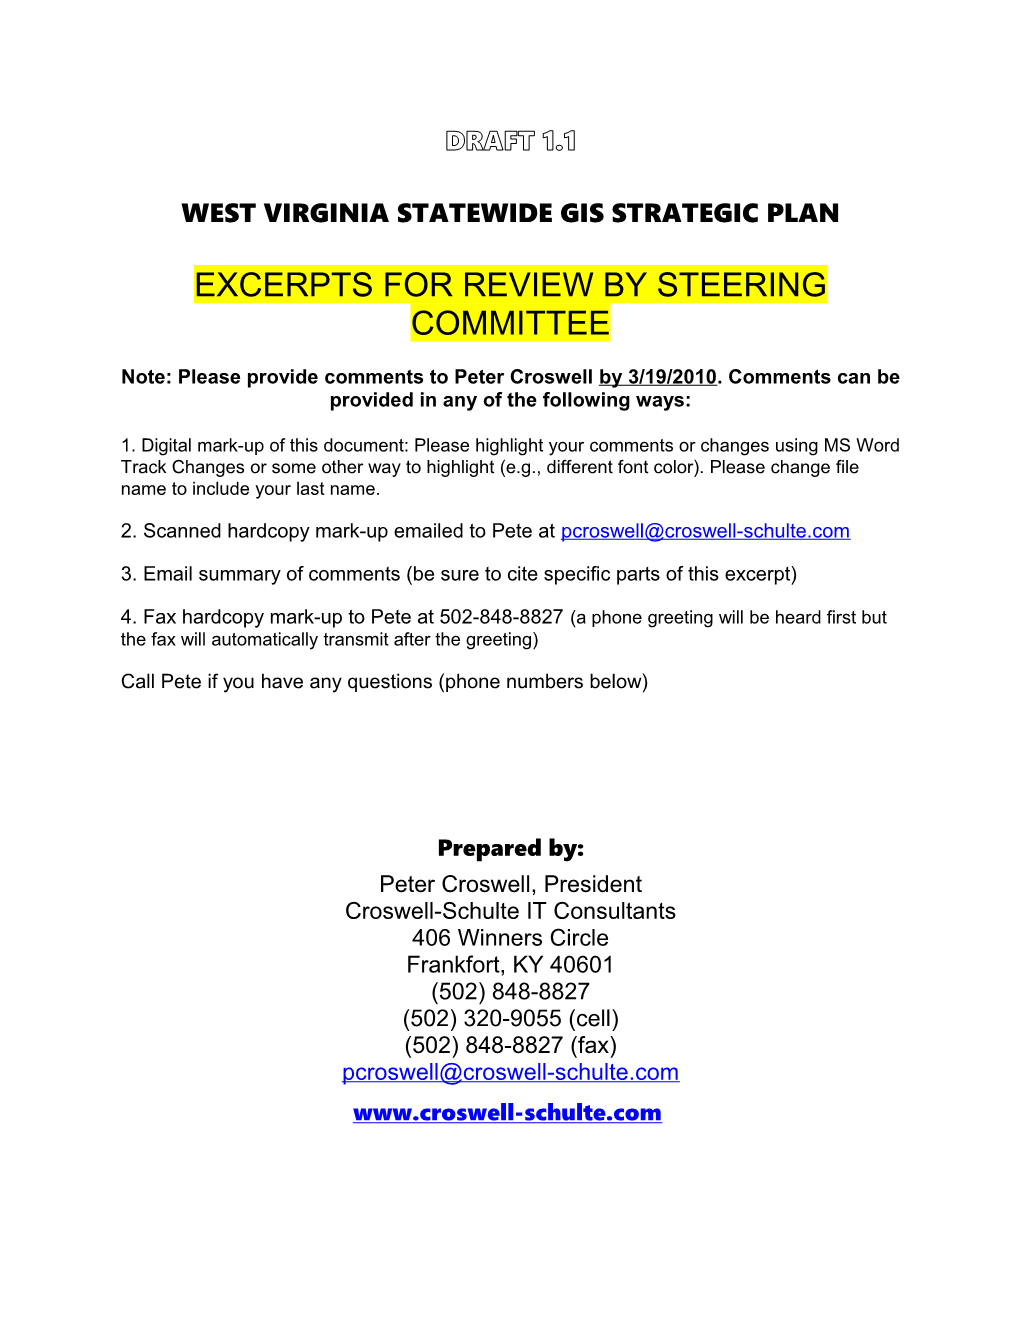 WV GIS Strategic Plan